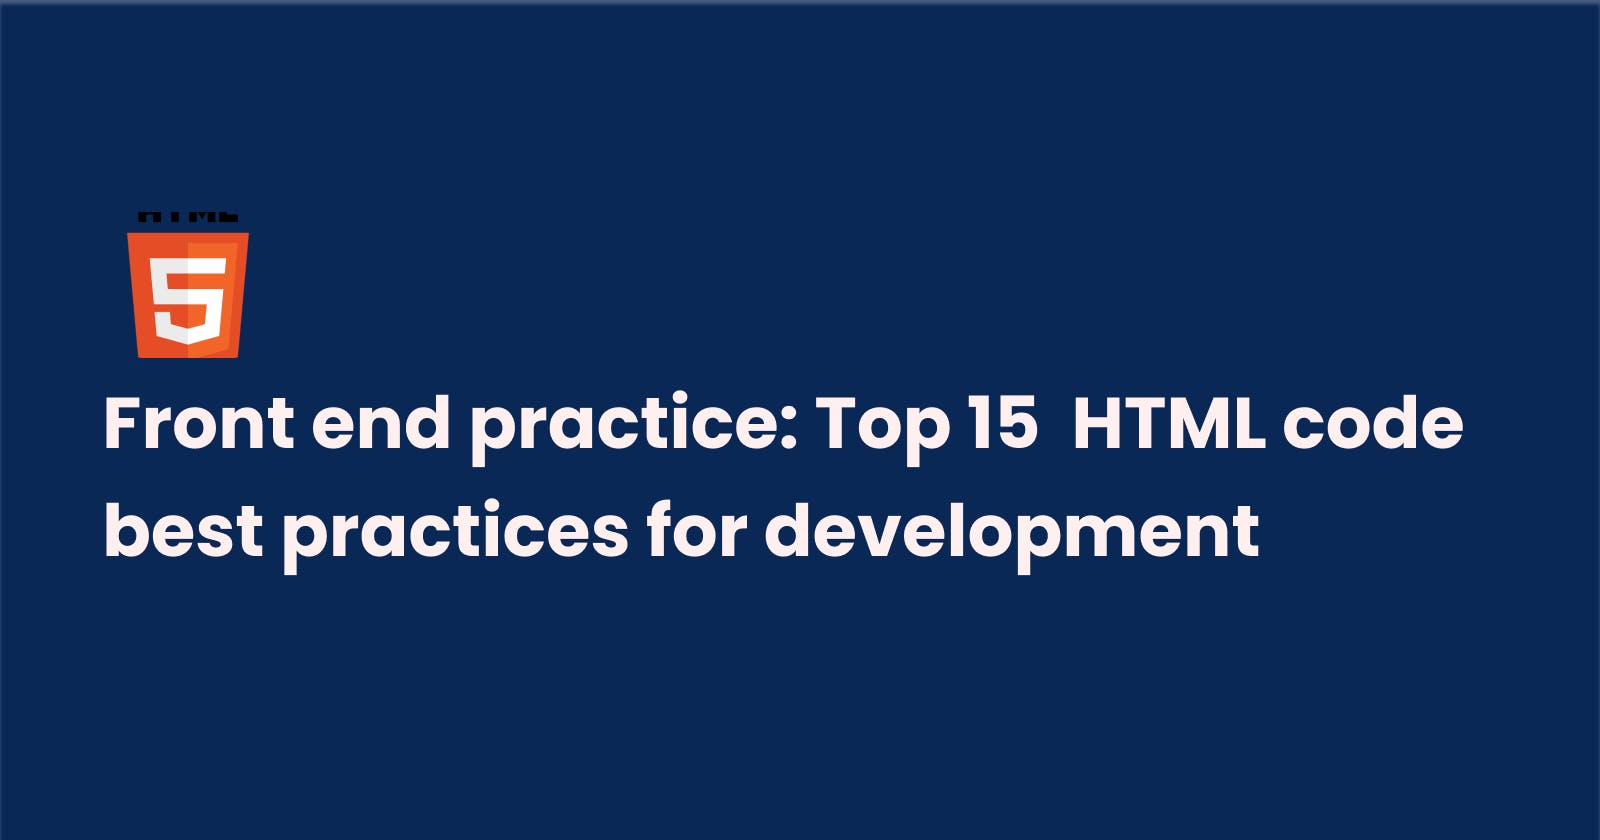 Front end practice: Top 15  HTML code
best practices for development